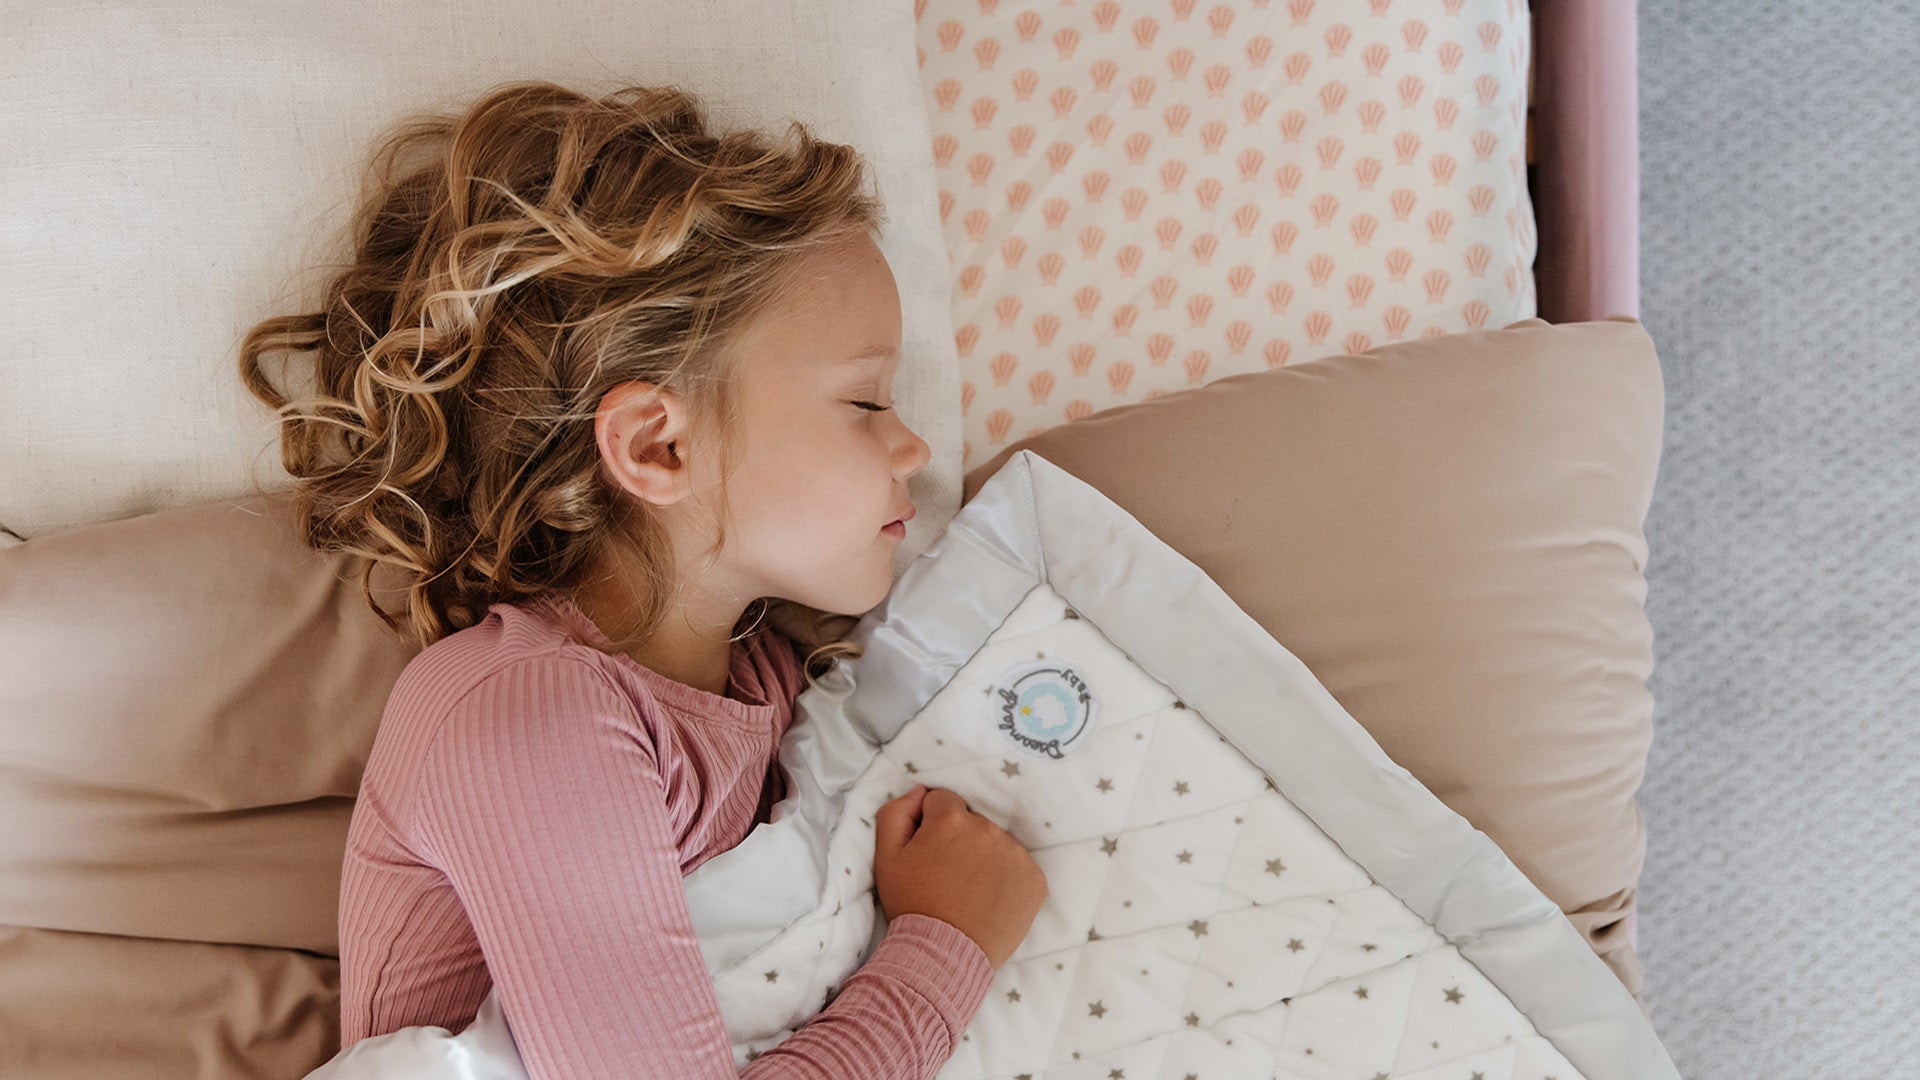 Toddler Sleep Regressions